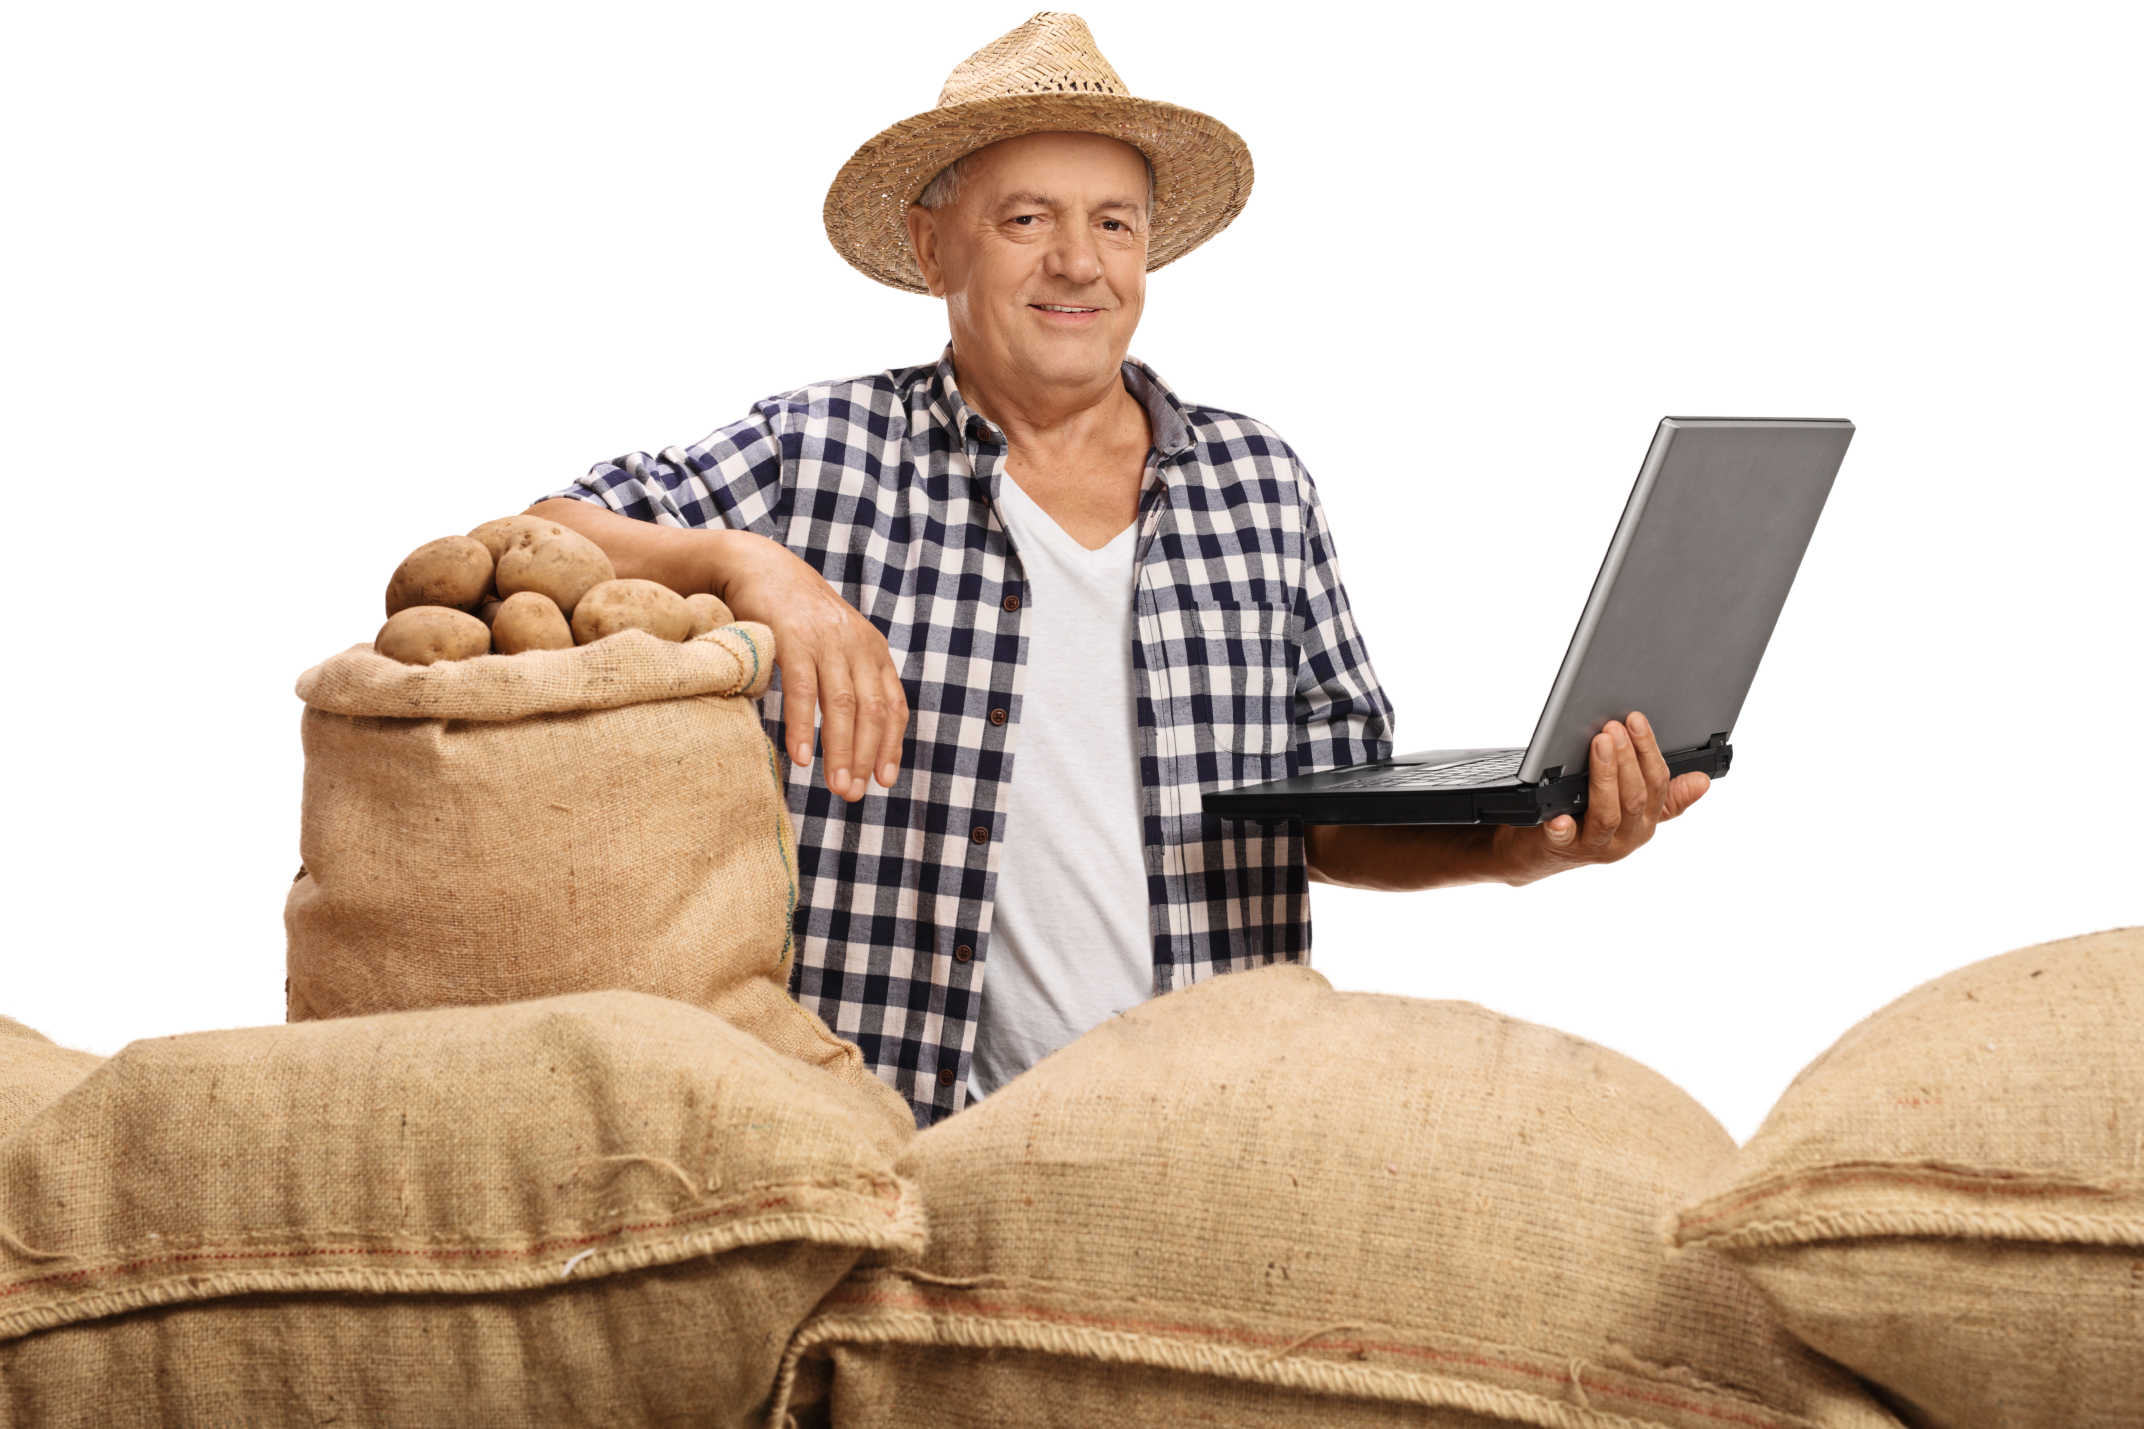 Mature farmer posing with pile of burlap sacks and laptop